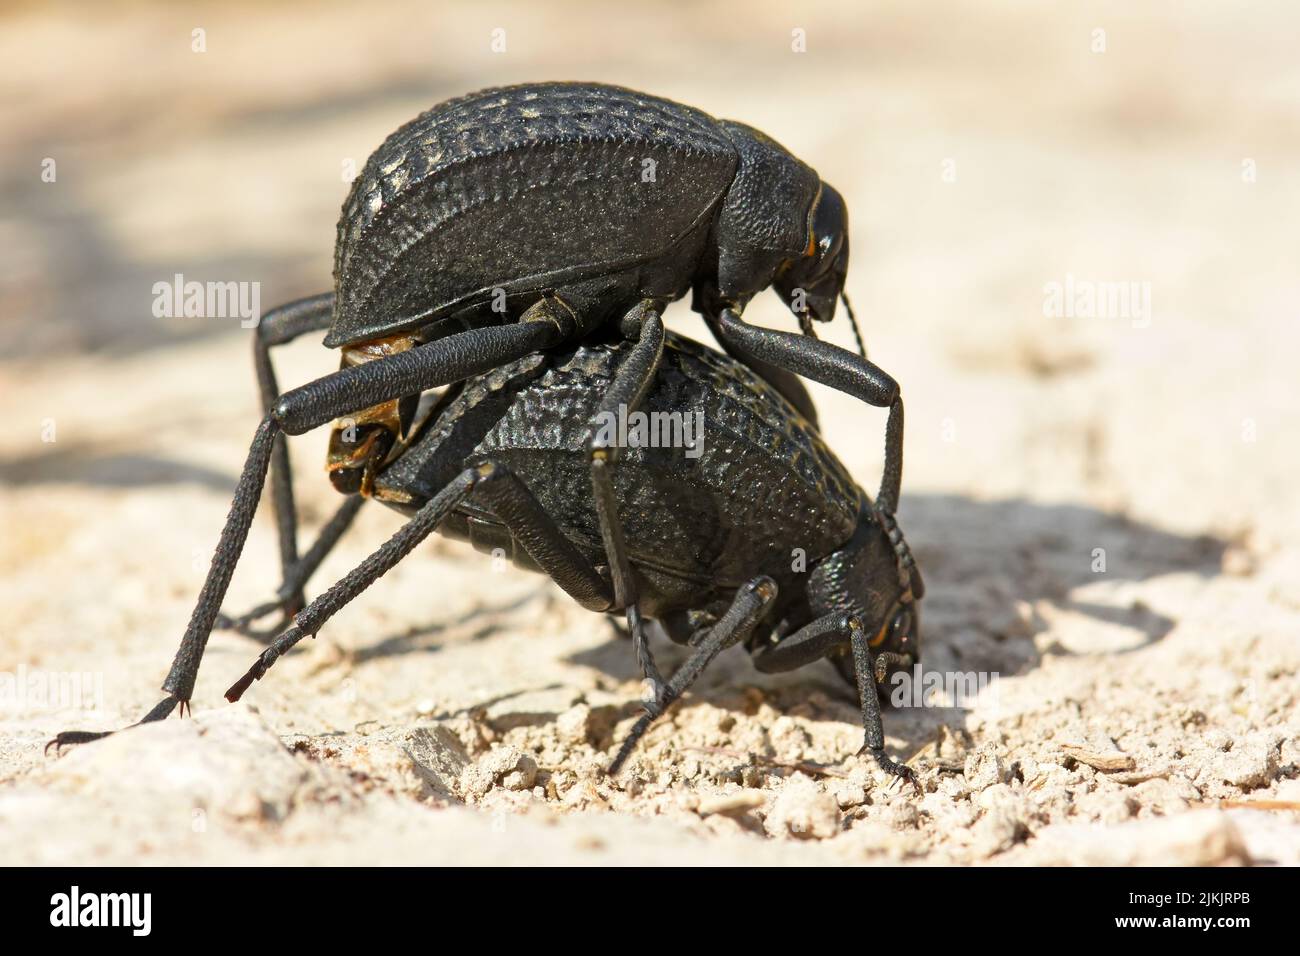 Black beetles mating in the desert Stock Photo